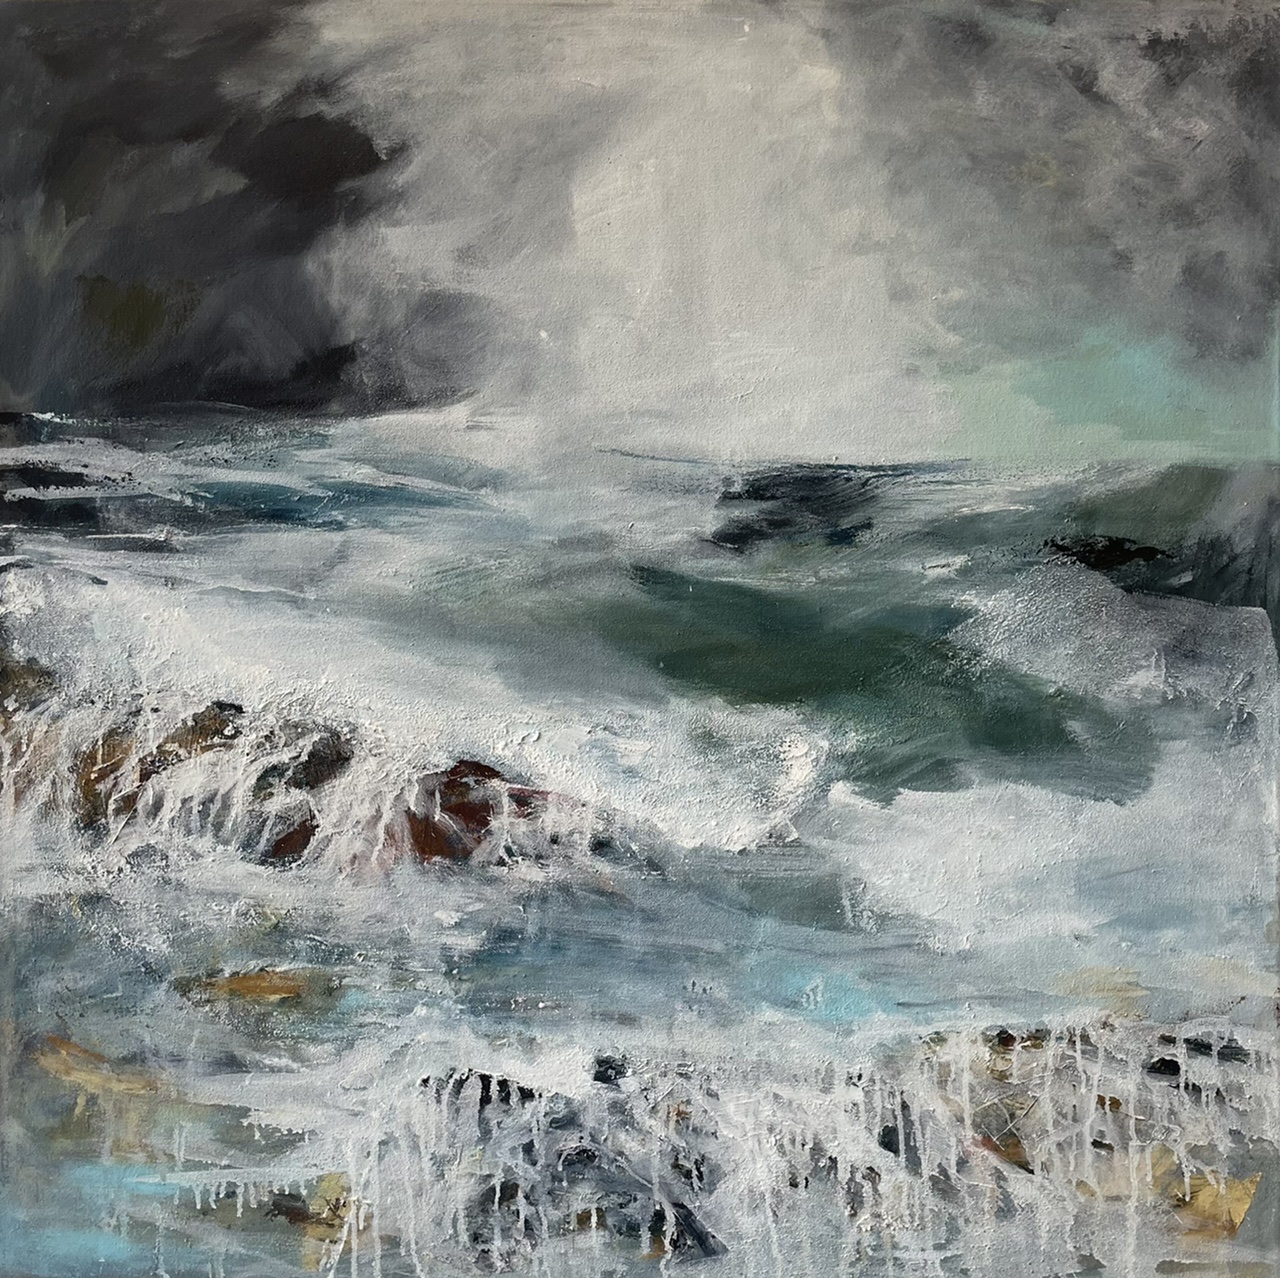 Green Sea, oil on canvas, 80x 80 cm